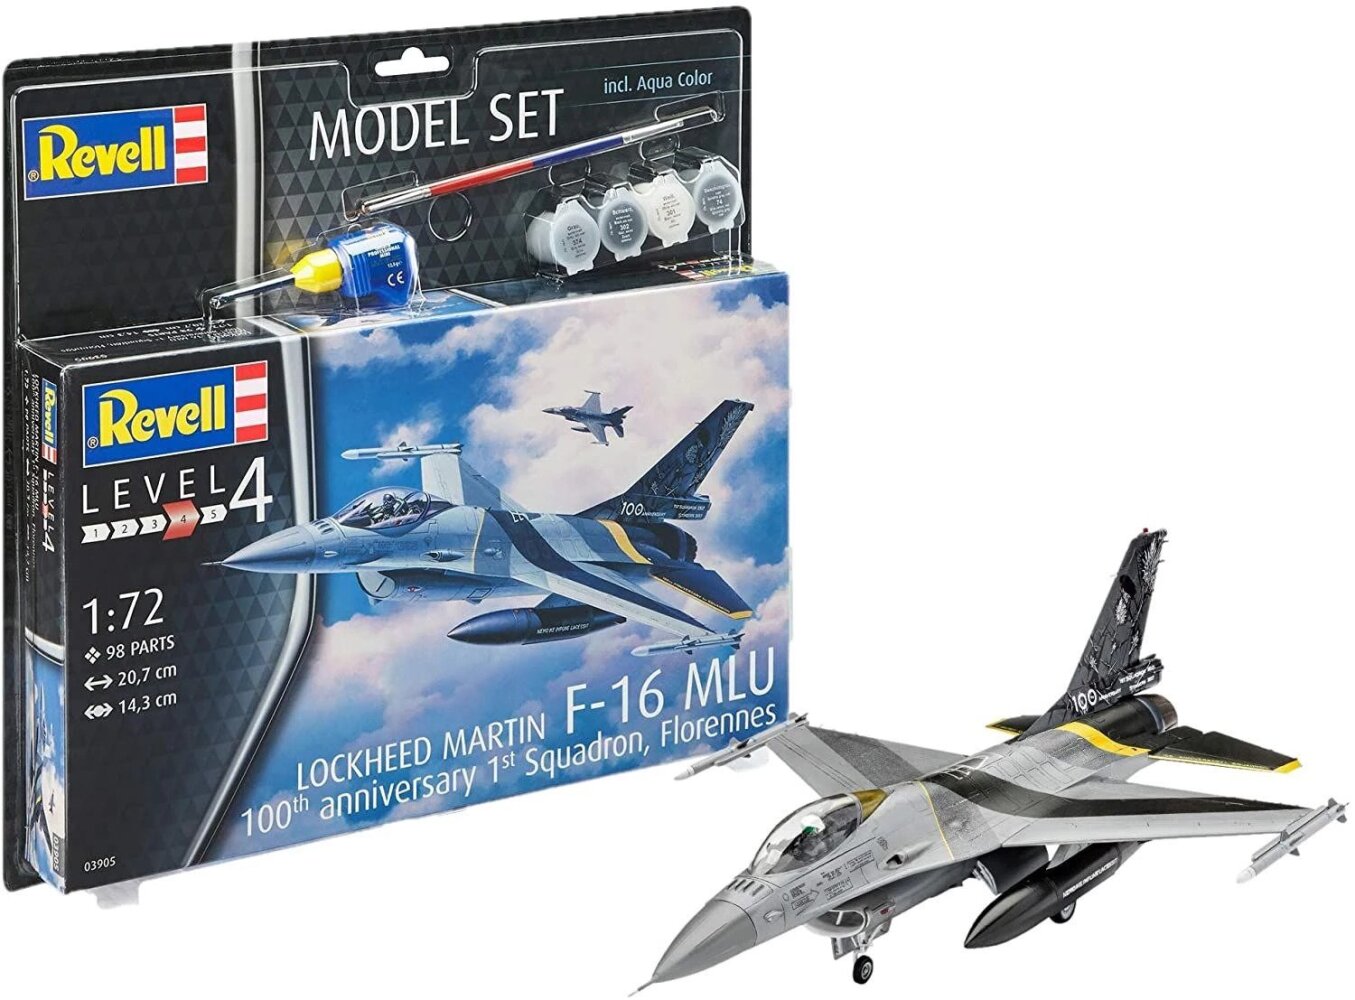 Model Set F-16 Mlu 100th Anniversary